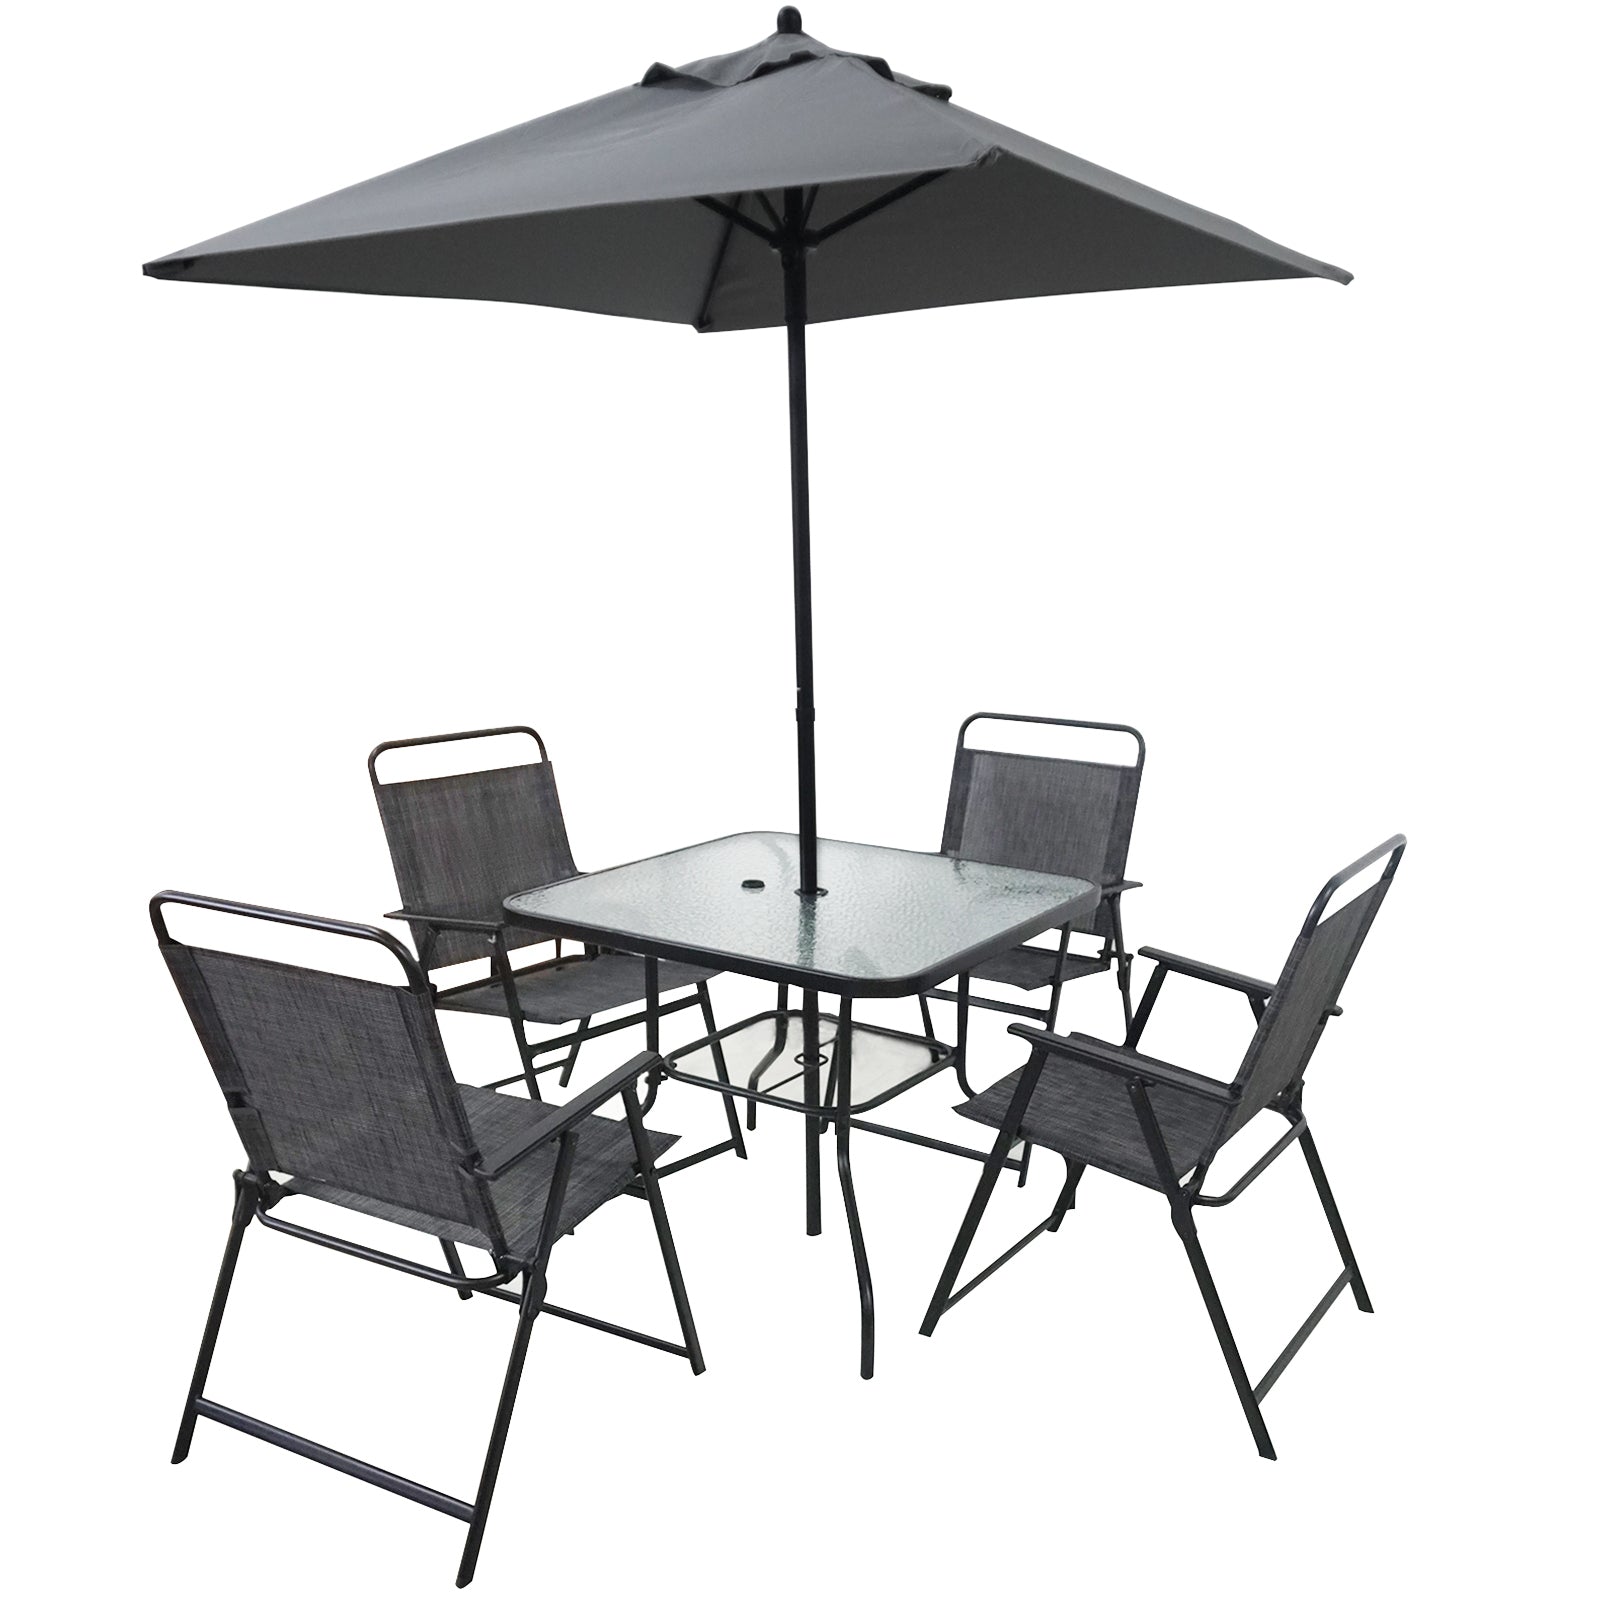 Five Piece Outdoor Metal Patio Dining Set with Umbrella (Black)